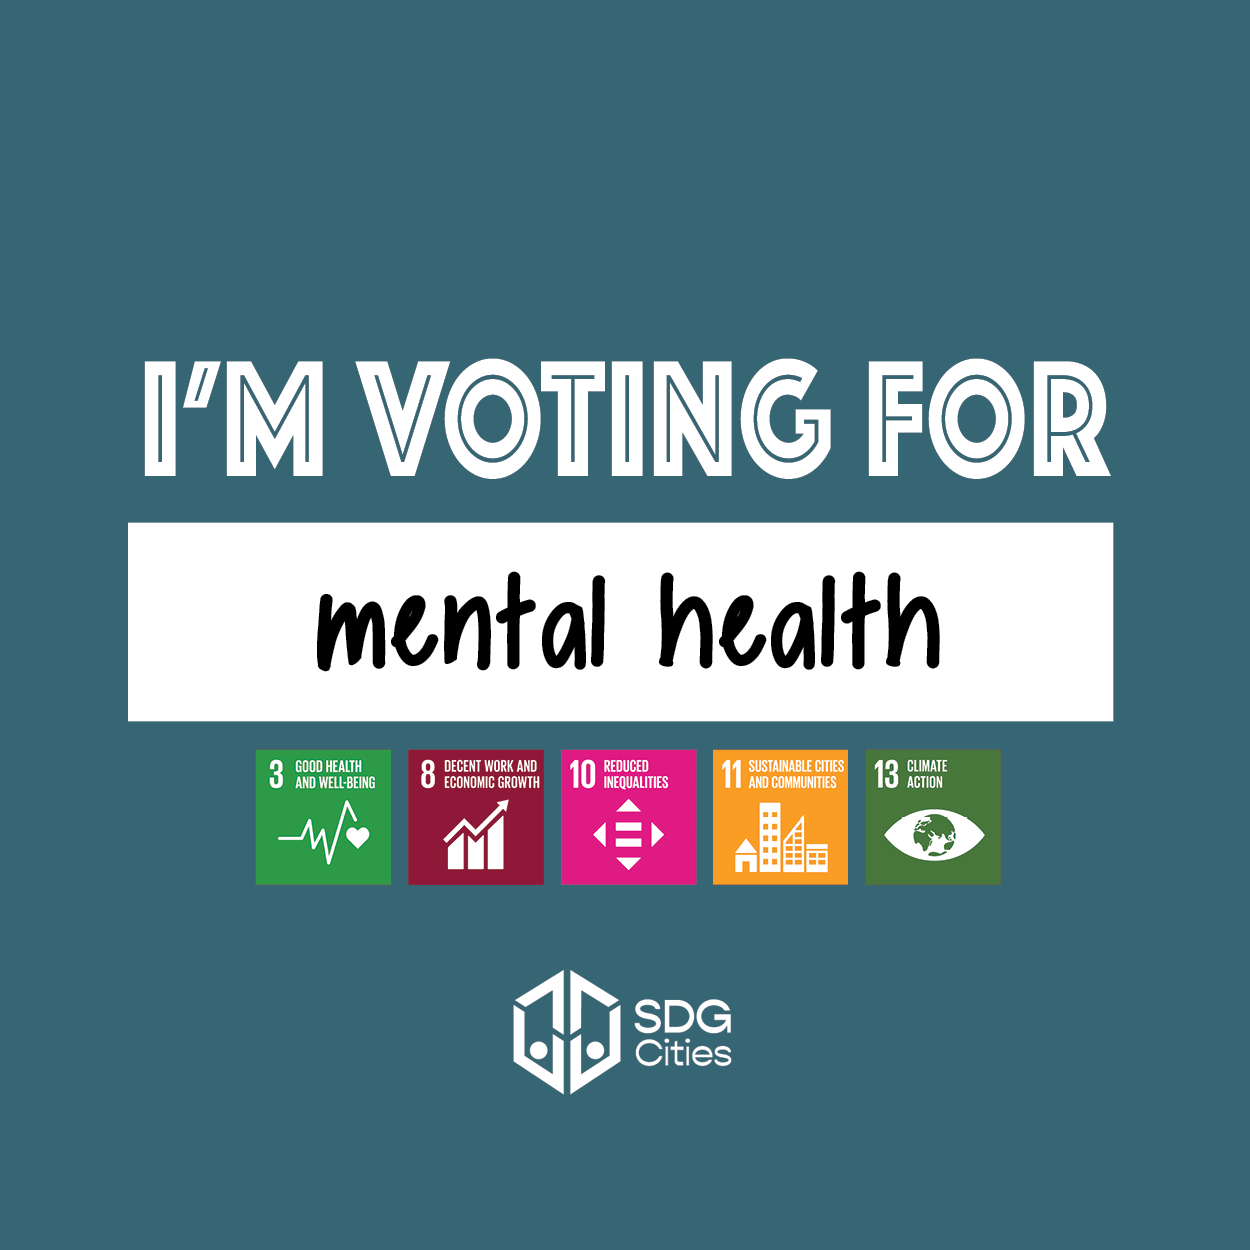 Vote 4 the SDGs Mental Health SDG Cities